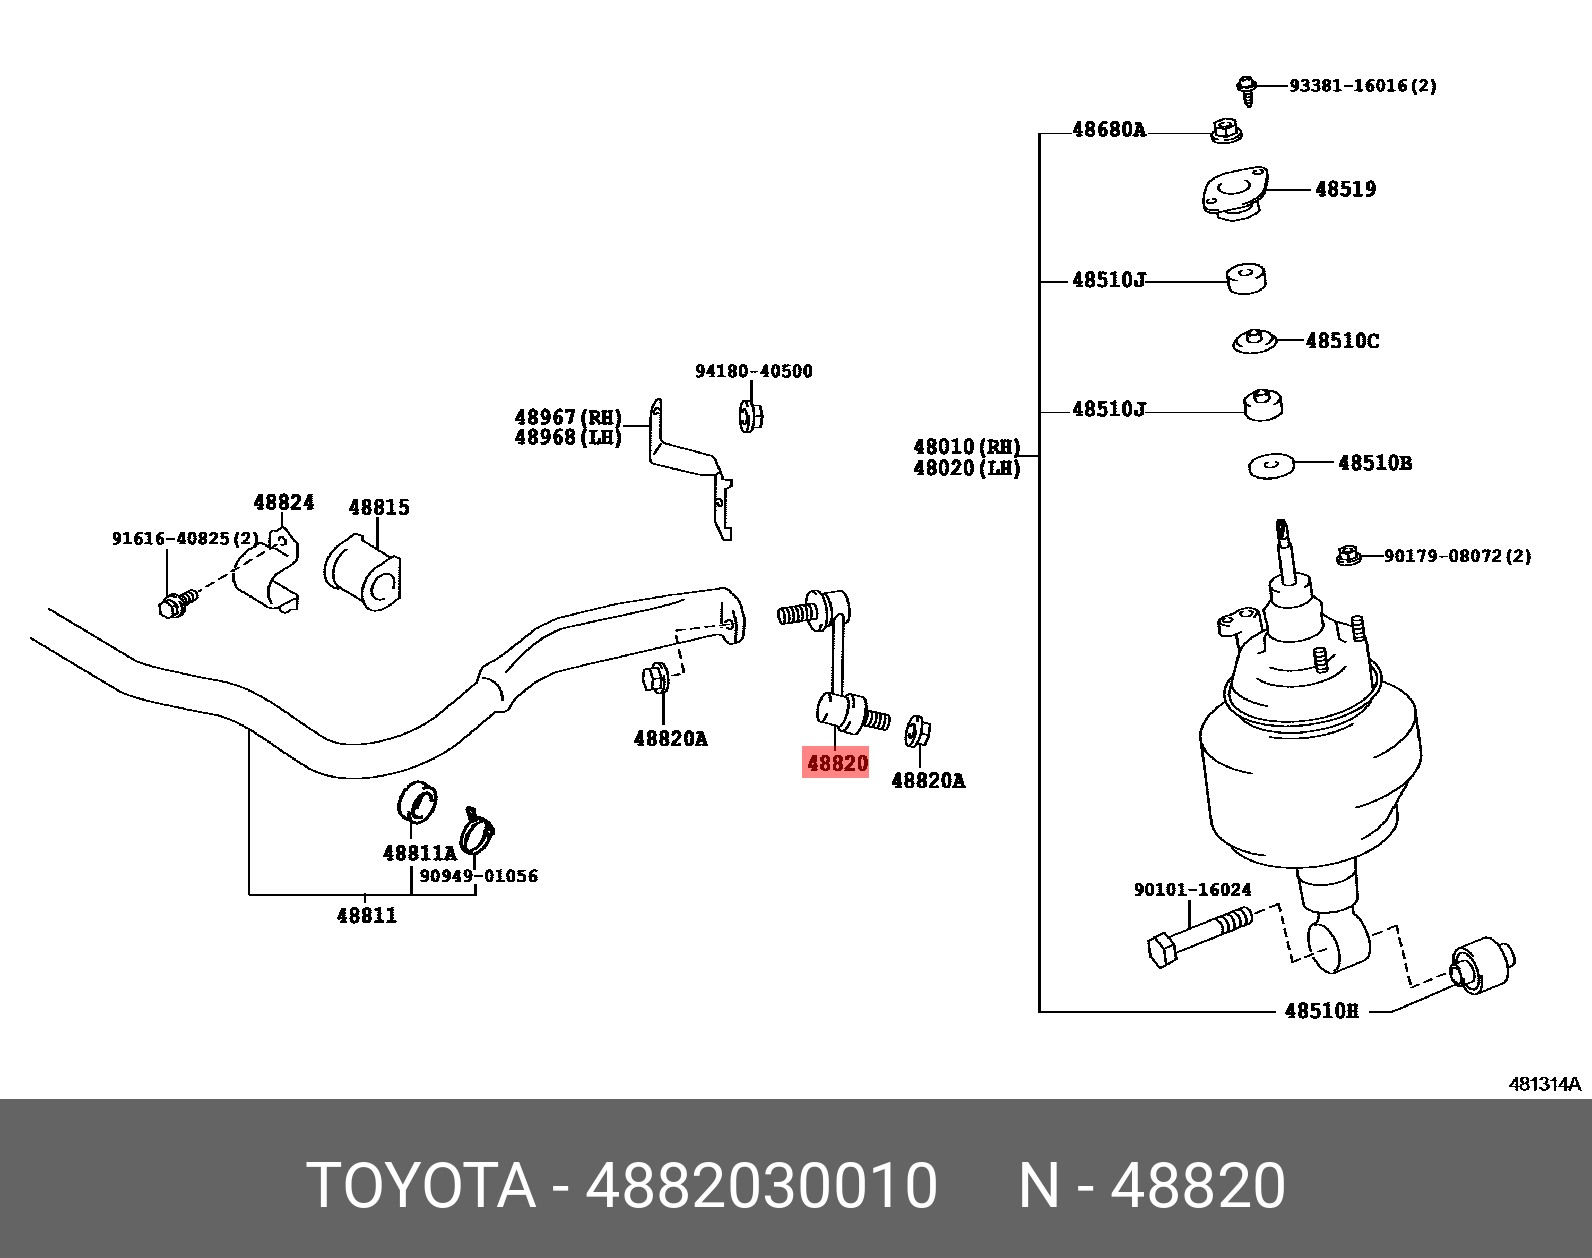 Стойка стабилизатора | перед прав | - Toyota 48820-30010